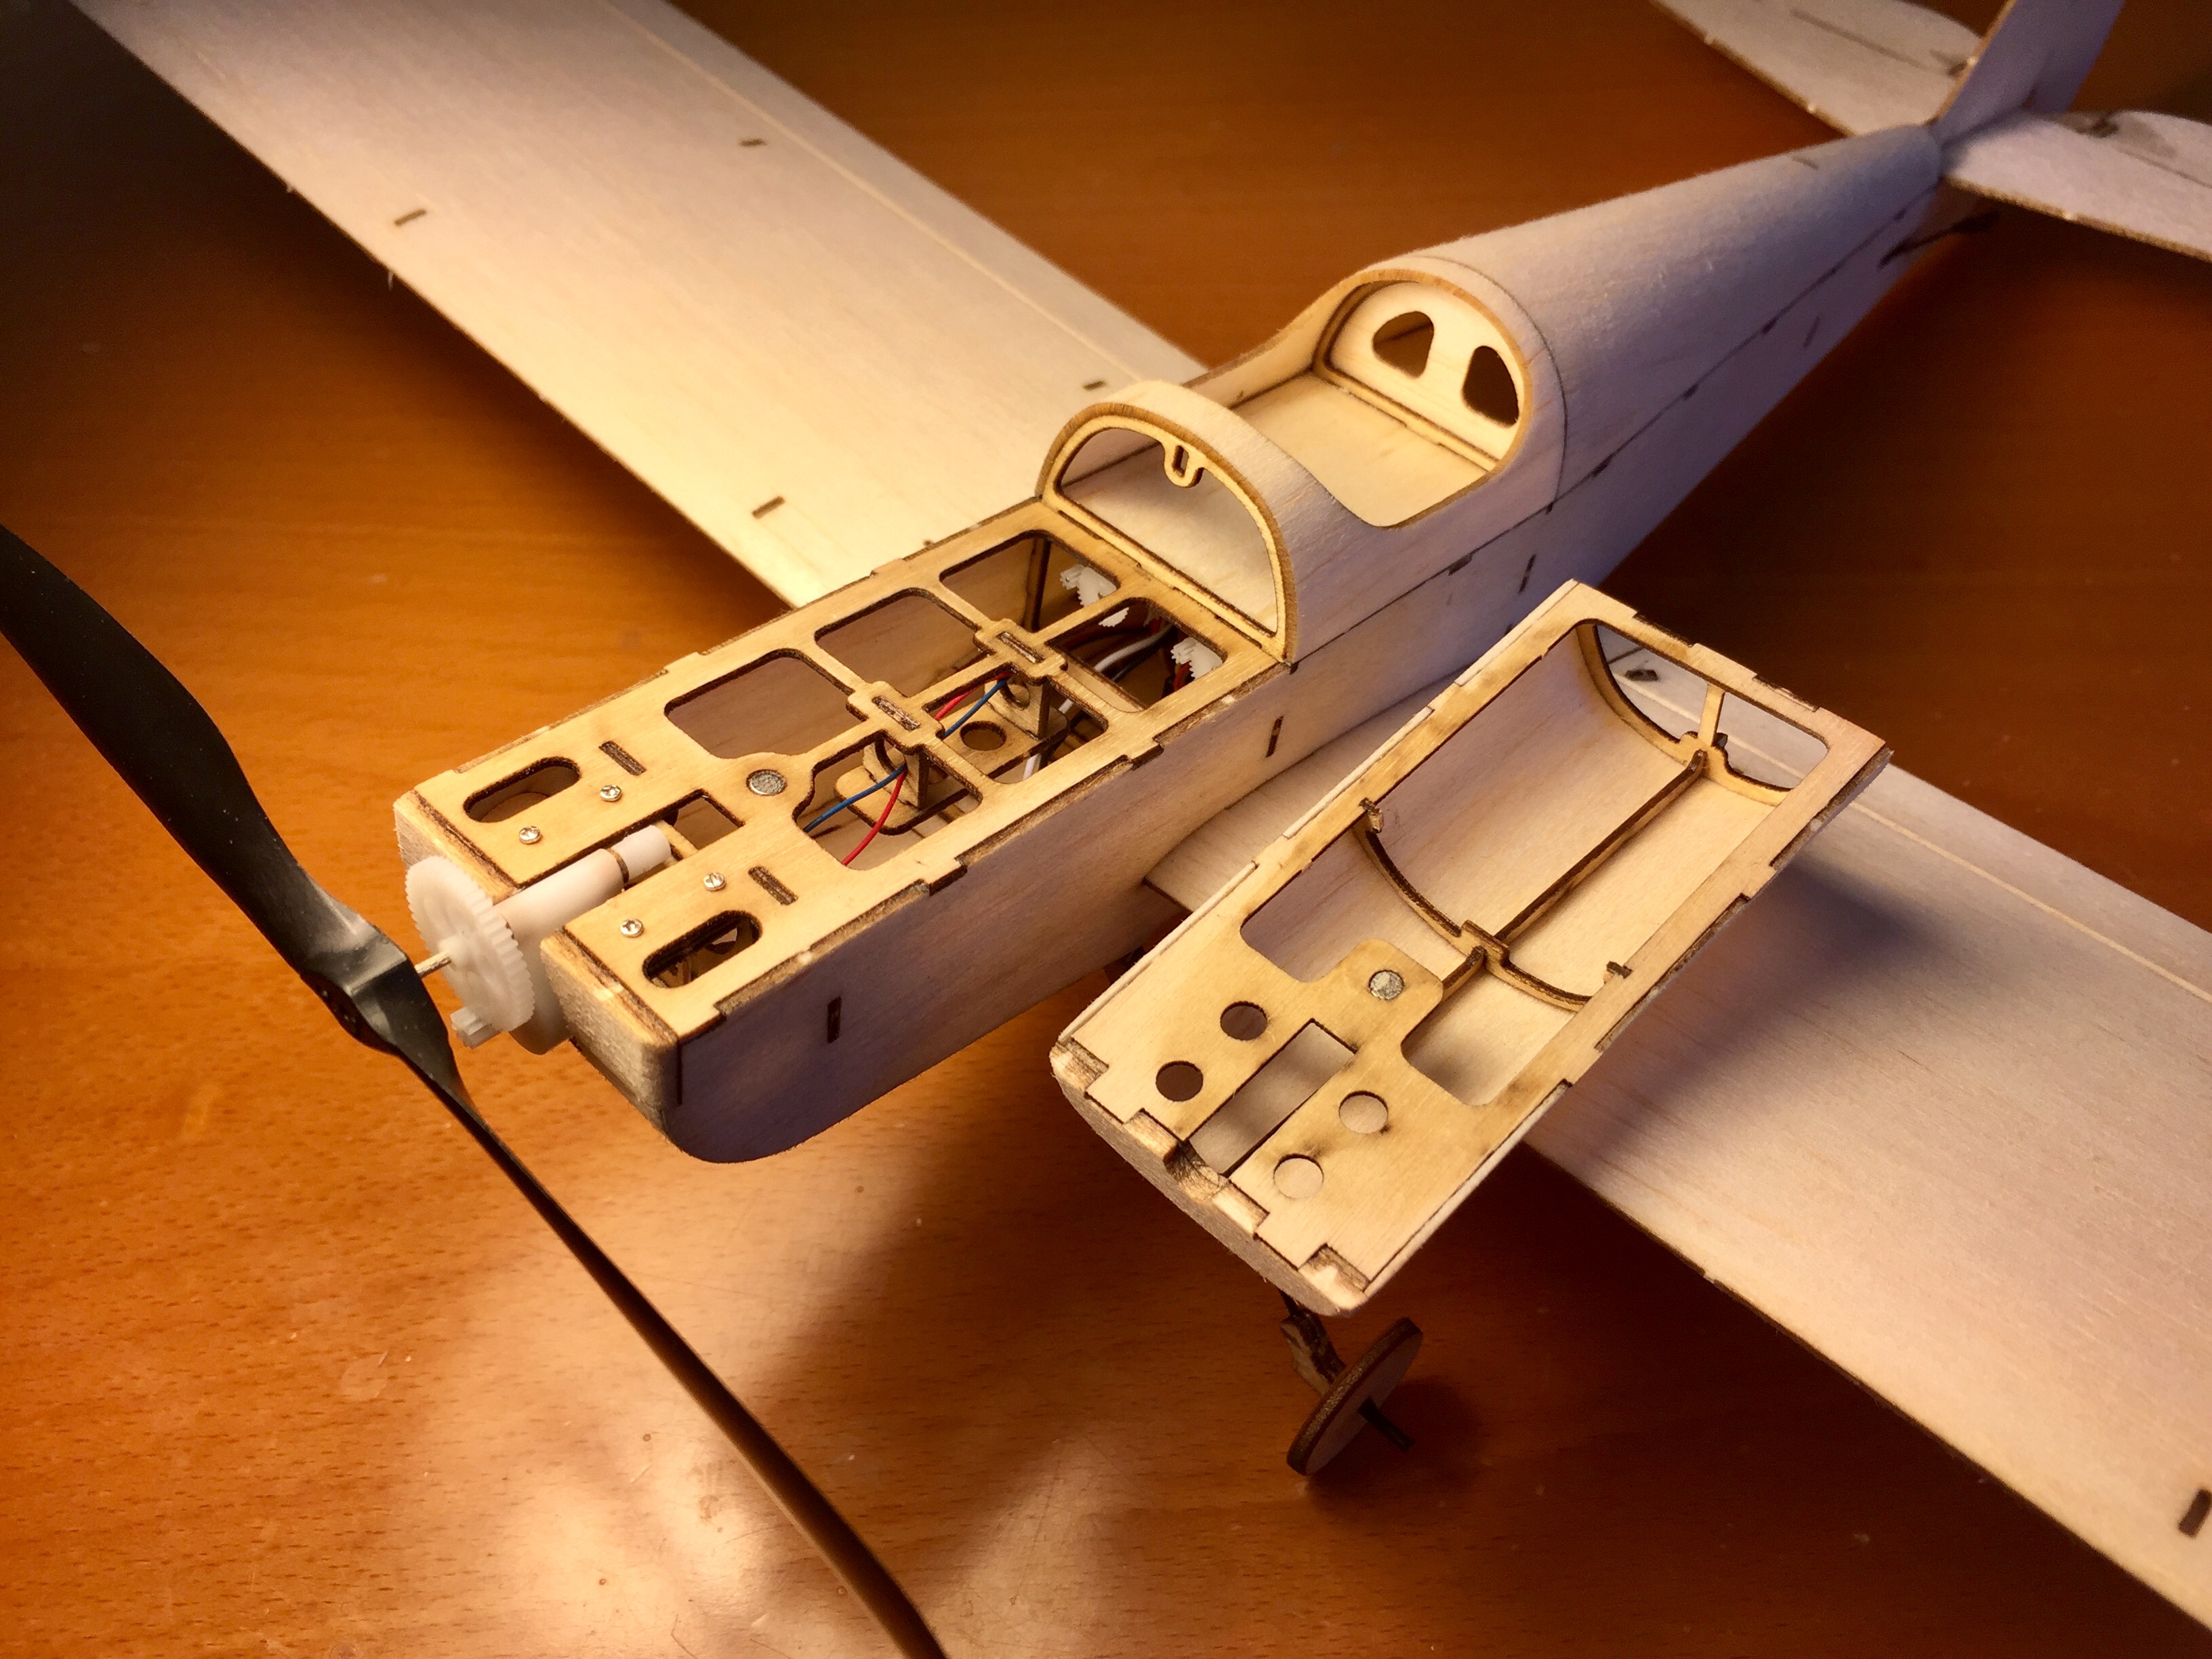 MinimumRC-Spacewalker-460mm-Wingspan-Balsa-Wood-Laser-Cut-RC-Airplane-KIT-1151157